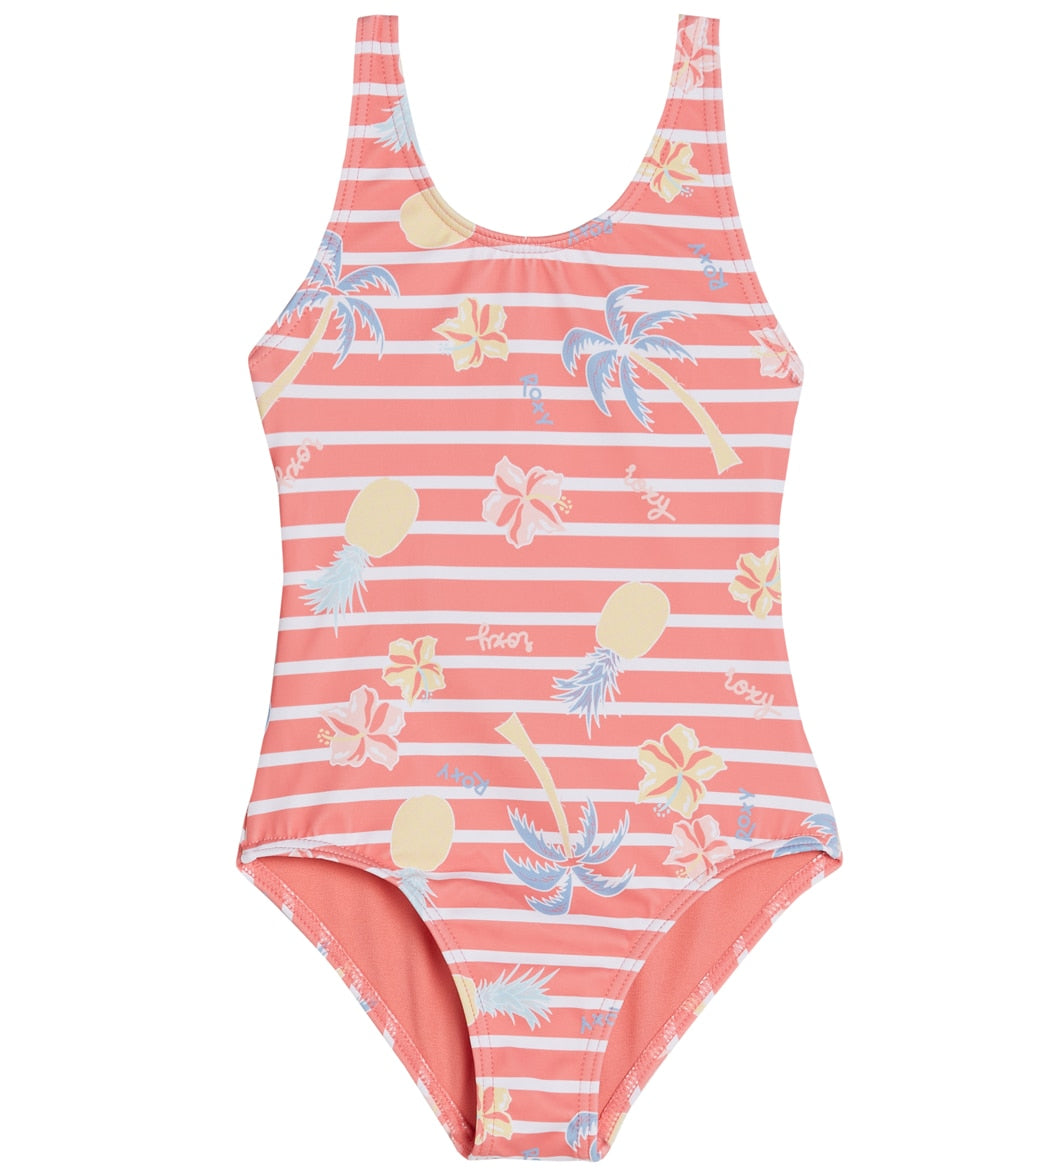 Roxy Girls Little Pineapple One Piece Swimsuit (Toddler, Little Kid)